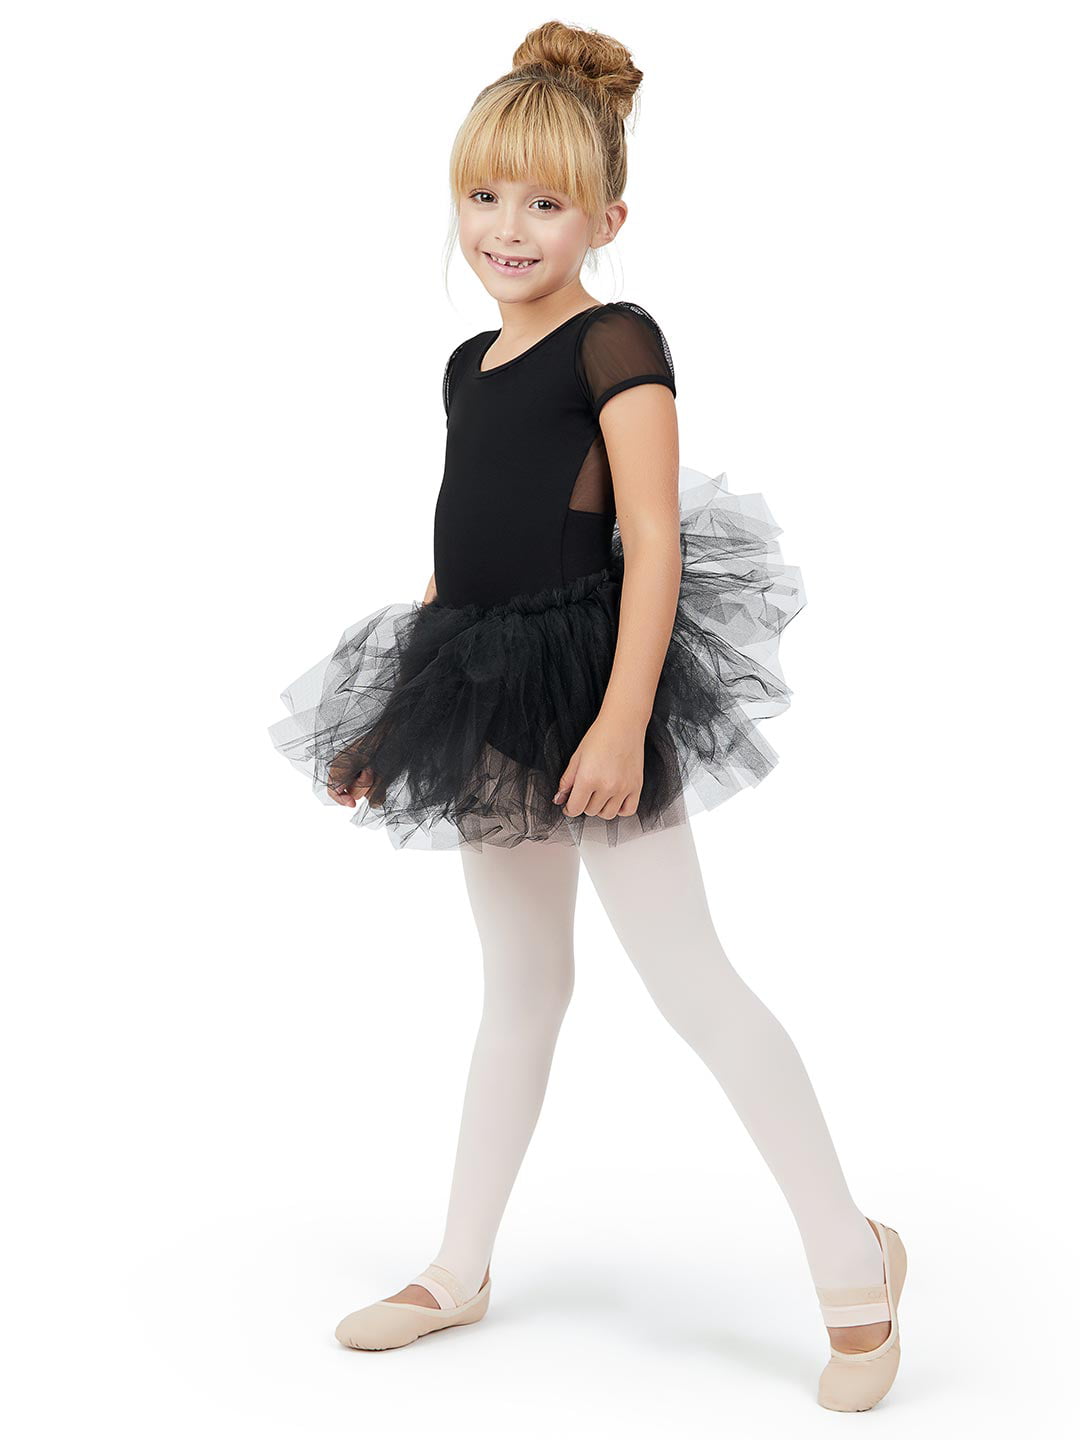 2PCS Children Kids Girls Romper+Ballet Dance Tutu Skirt Cotton Clothes Outfits 0 